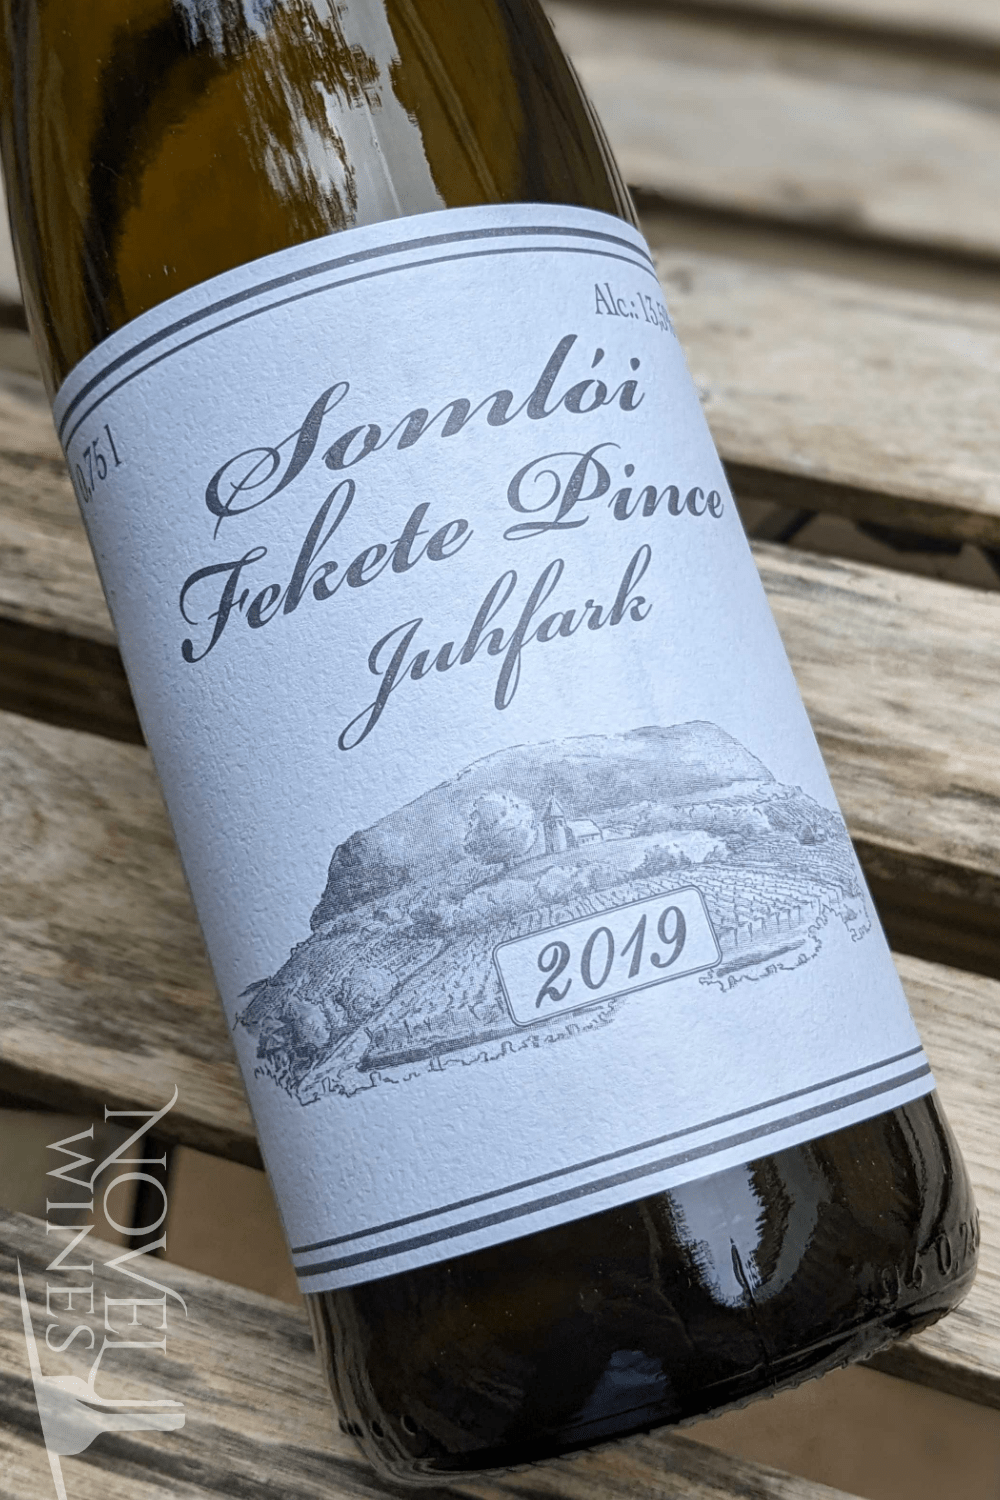 Novel Wines Fekete Pince Juhfark 2019, Hungary